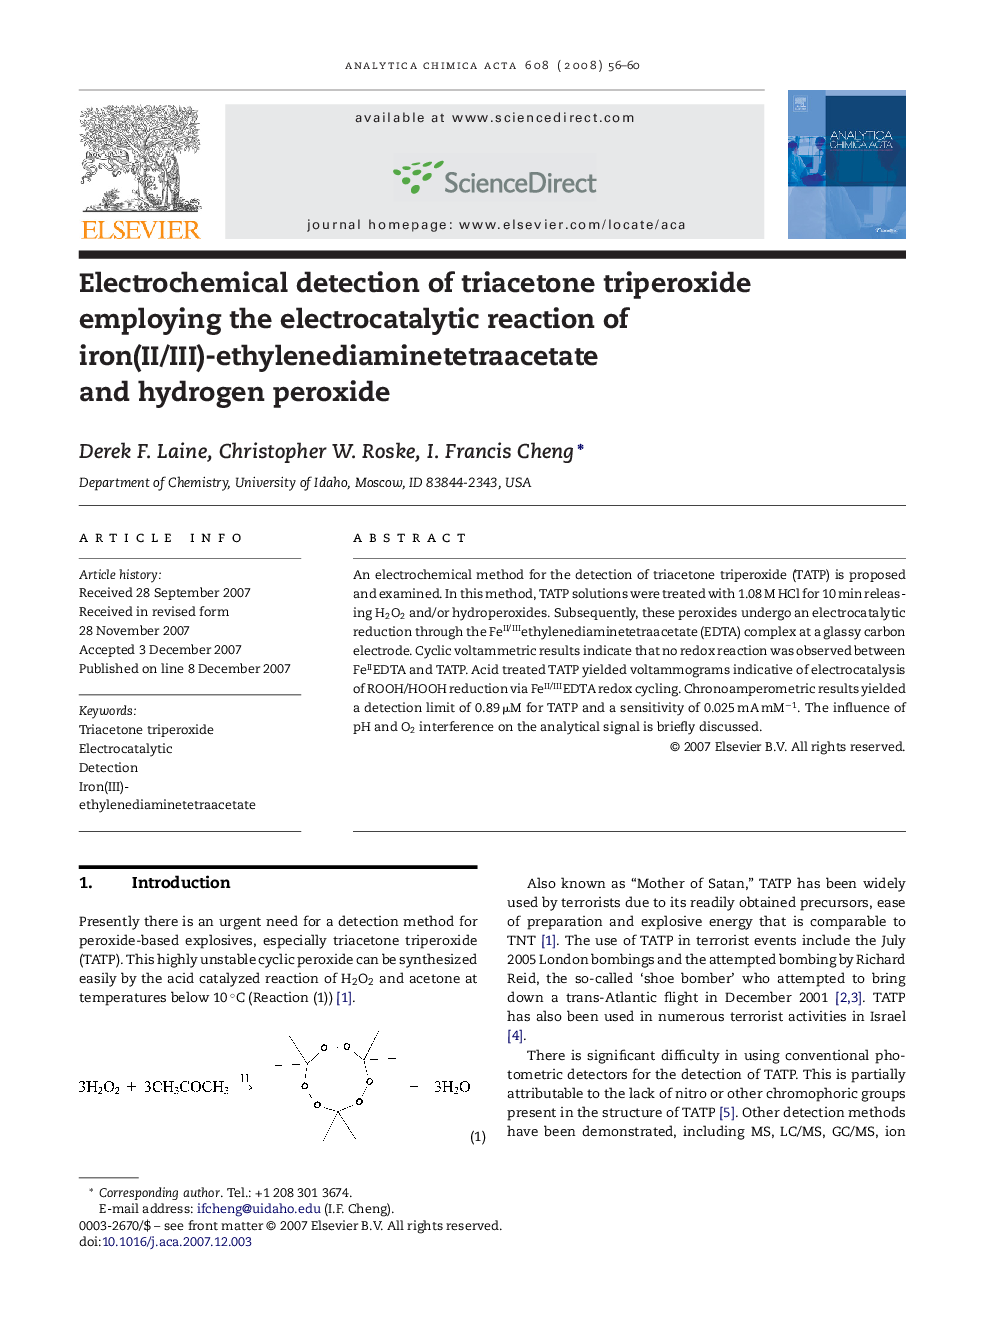 Electrochemical detection of triacetone triperoxide employing the electrocatalytic reaction of iron(II/III)-ethylenediaminetetraacetate and hydrogen peroxide